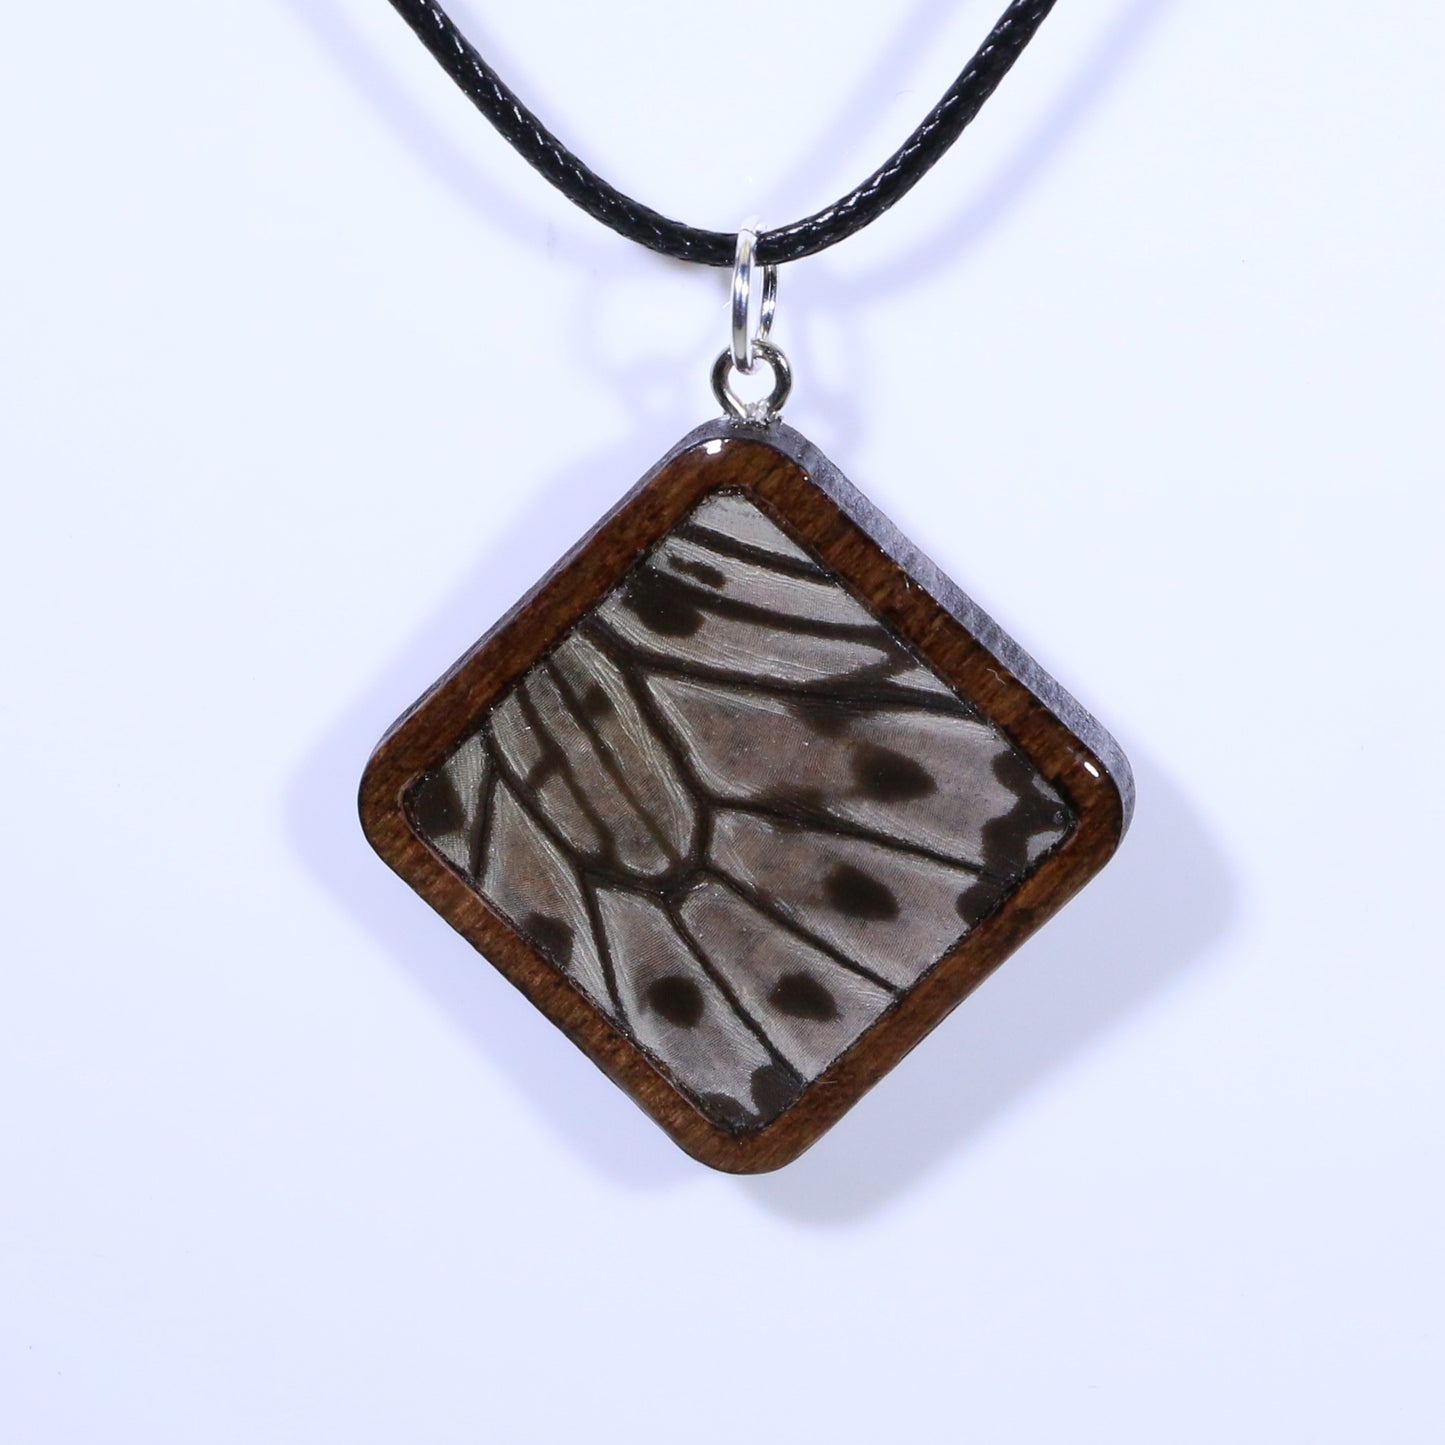 52919 - Real Butterfly Wing Jewelry - Pendant - Dark Wood - Large - Diamond Shape - Paper Kite